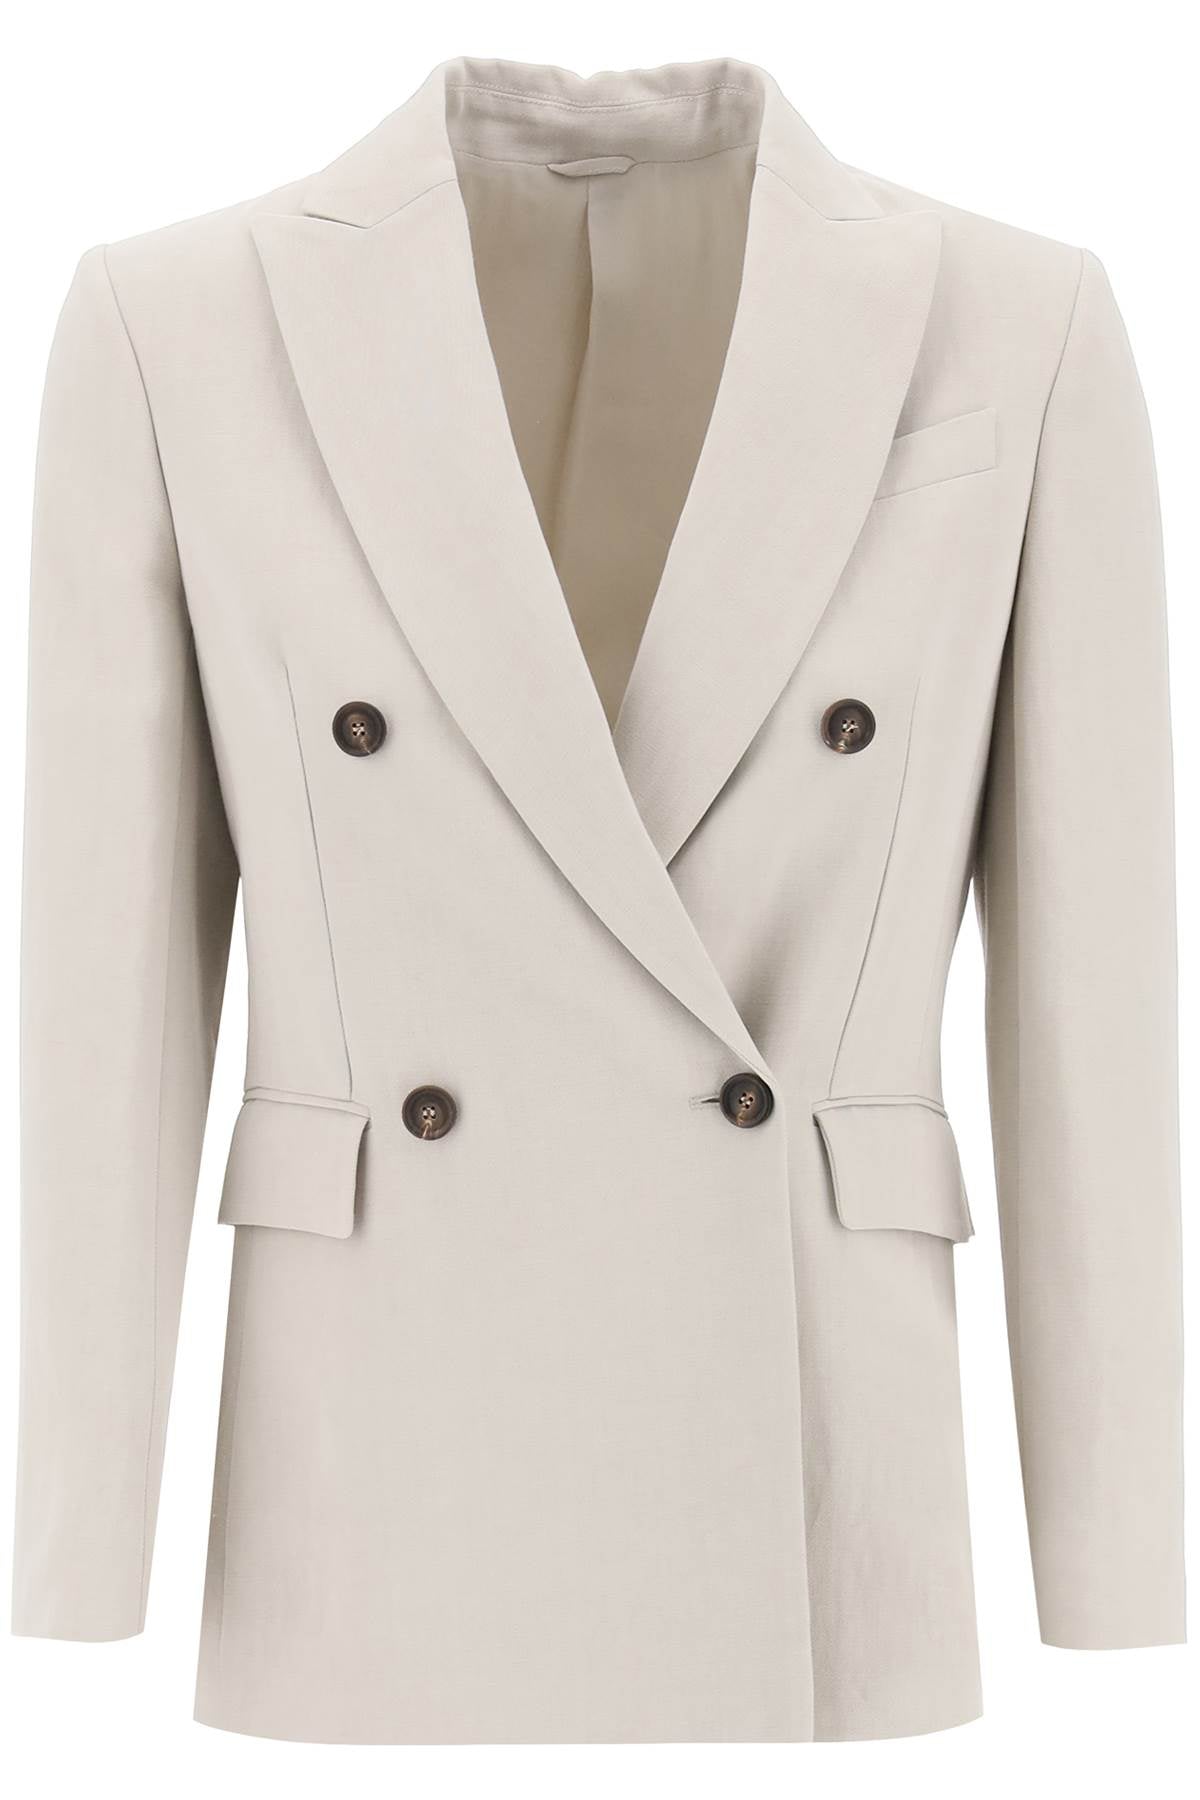 Brunello cucinelli twill jacket with monile detail-Jacket-BRUNELLO CUCINELLI-38-Beige-Urbanheer